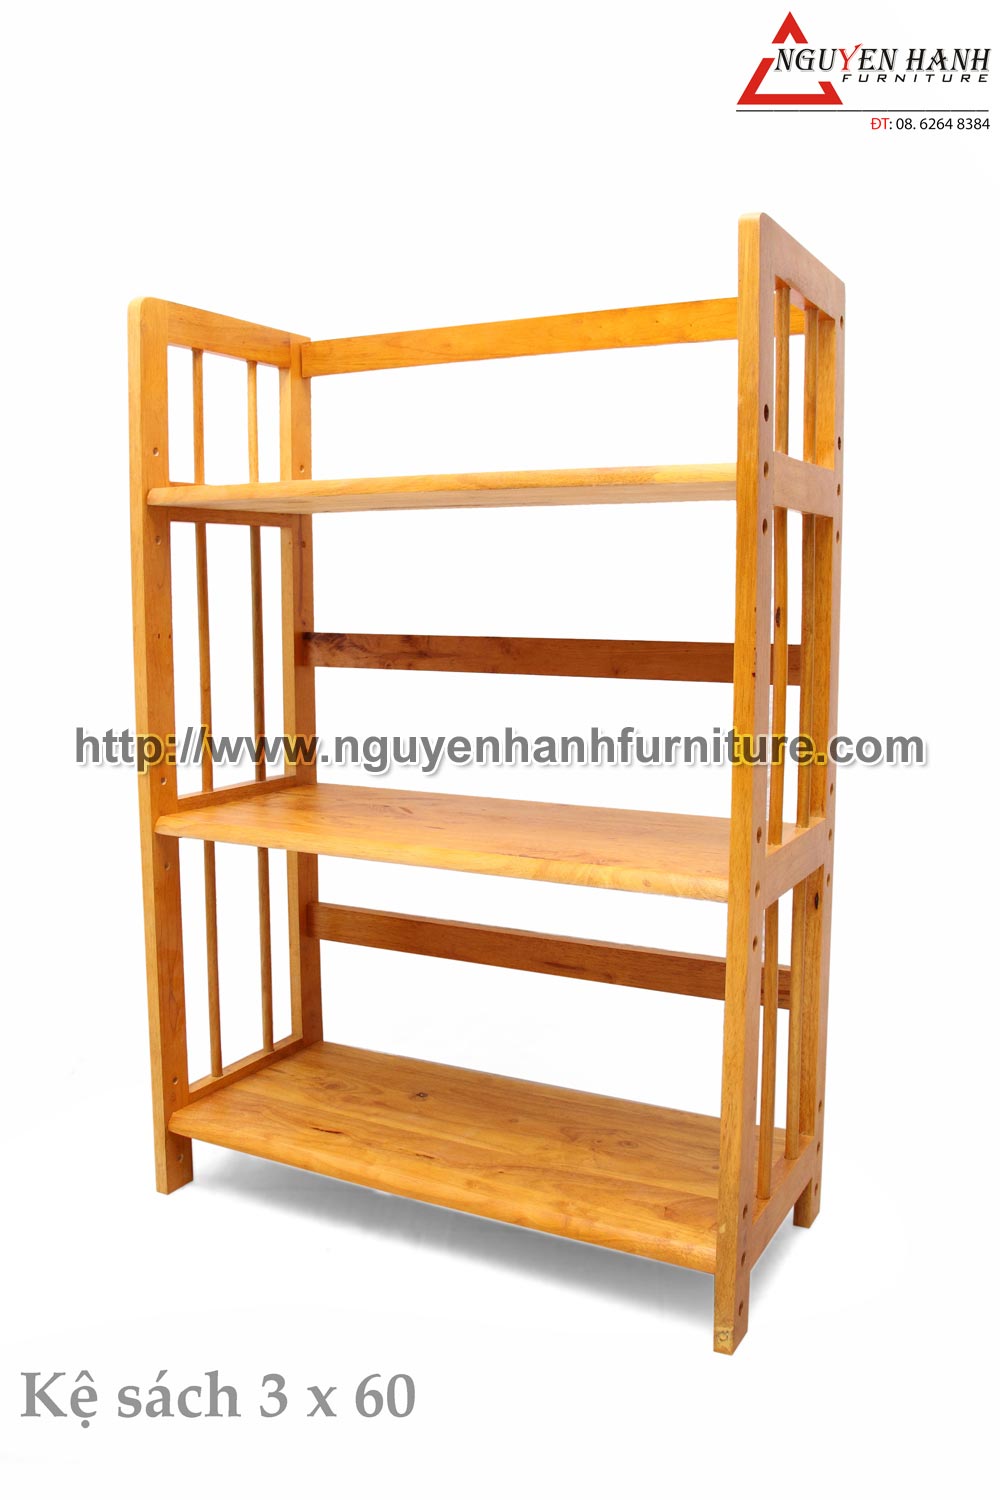 Name product: Triple storey Adjustable Bookshelf 60 (Yellow) - Dimensions: 63 x 28 x 90 (H) - Description: Wood natural rubber